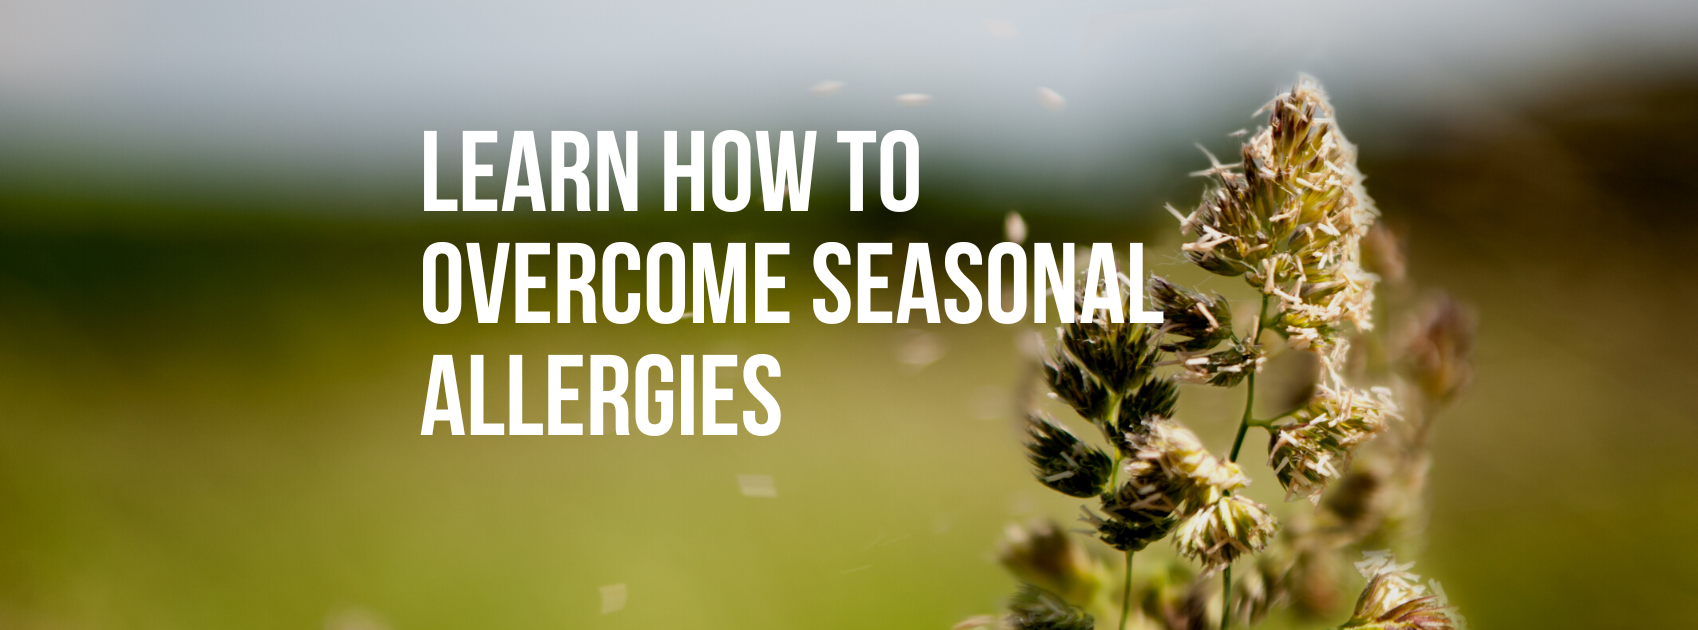 Learn How to Overcome Seasonal Allergies